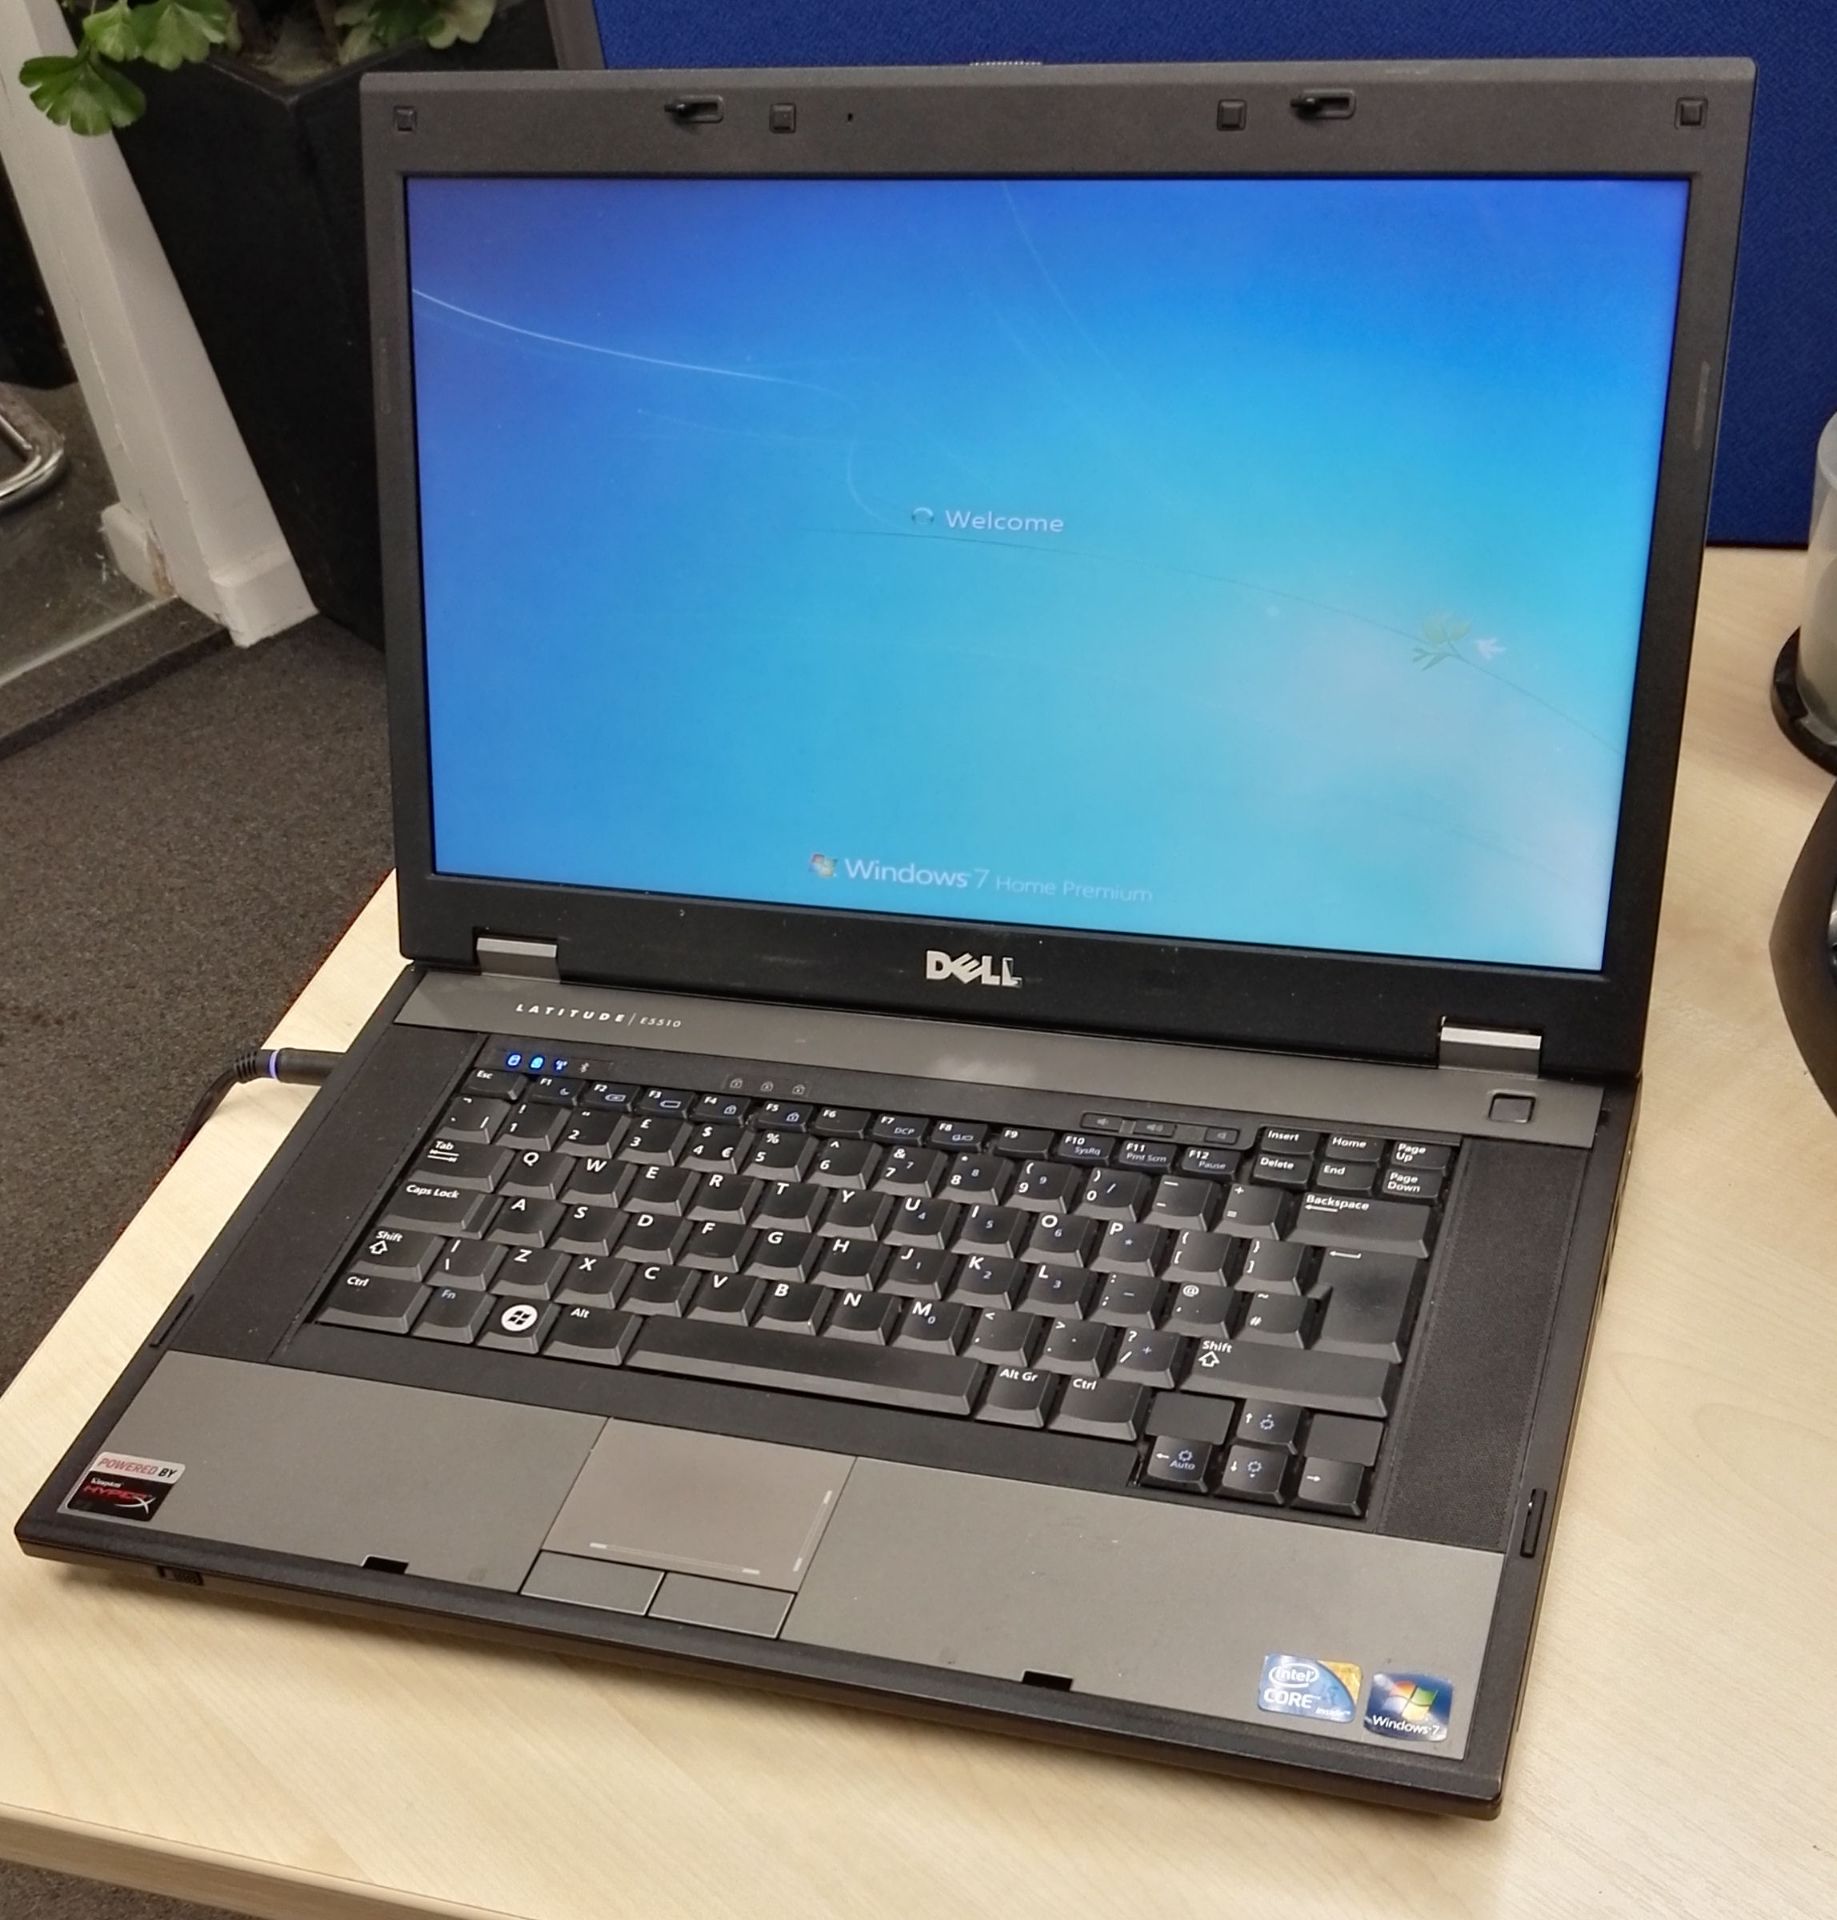 1 x Dell E5510 Latitude Laptop Computer - Features 6gb RAM, 320gb Hard Drive, Intel i5 2.4GHz